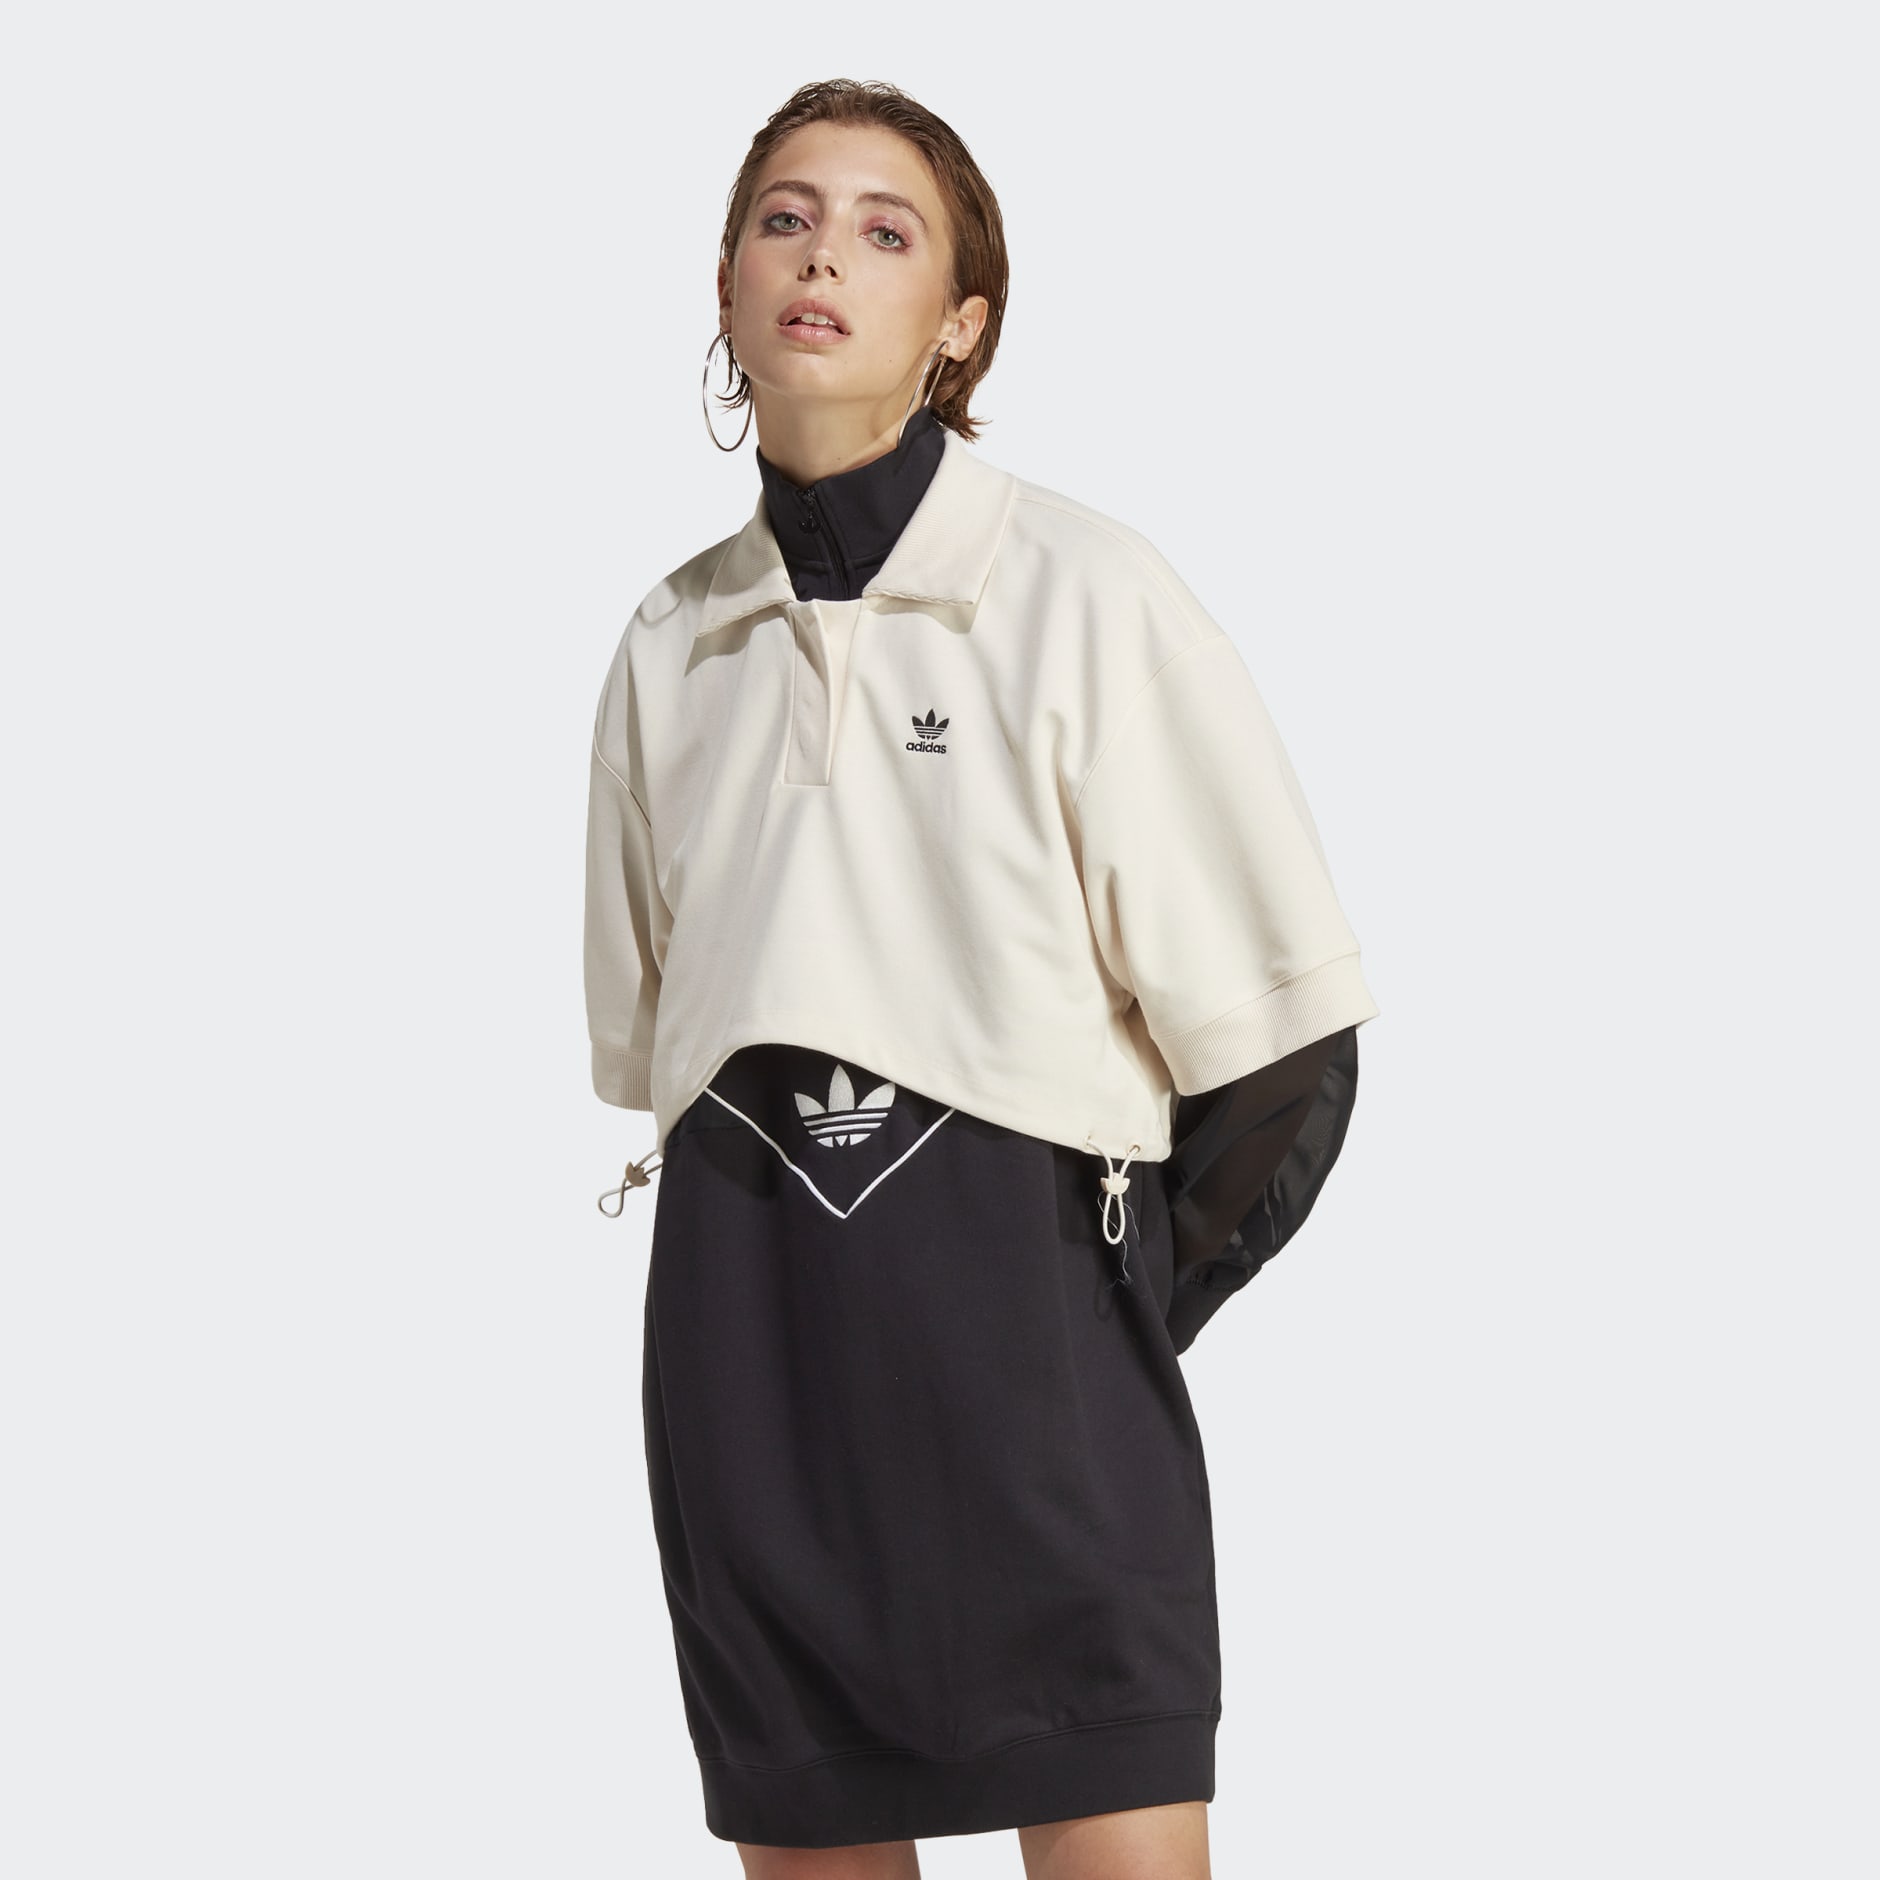 Women's Clothing - Always Original Polo Shirt - White | adidas Qatar